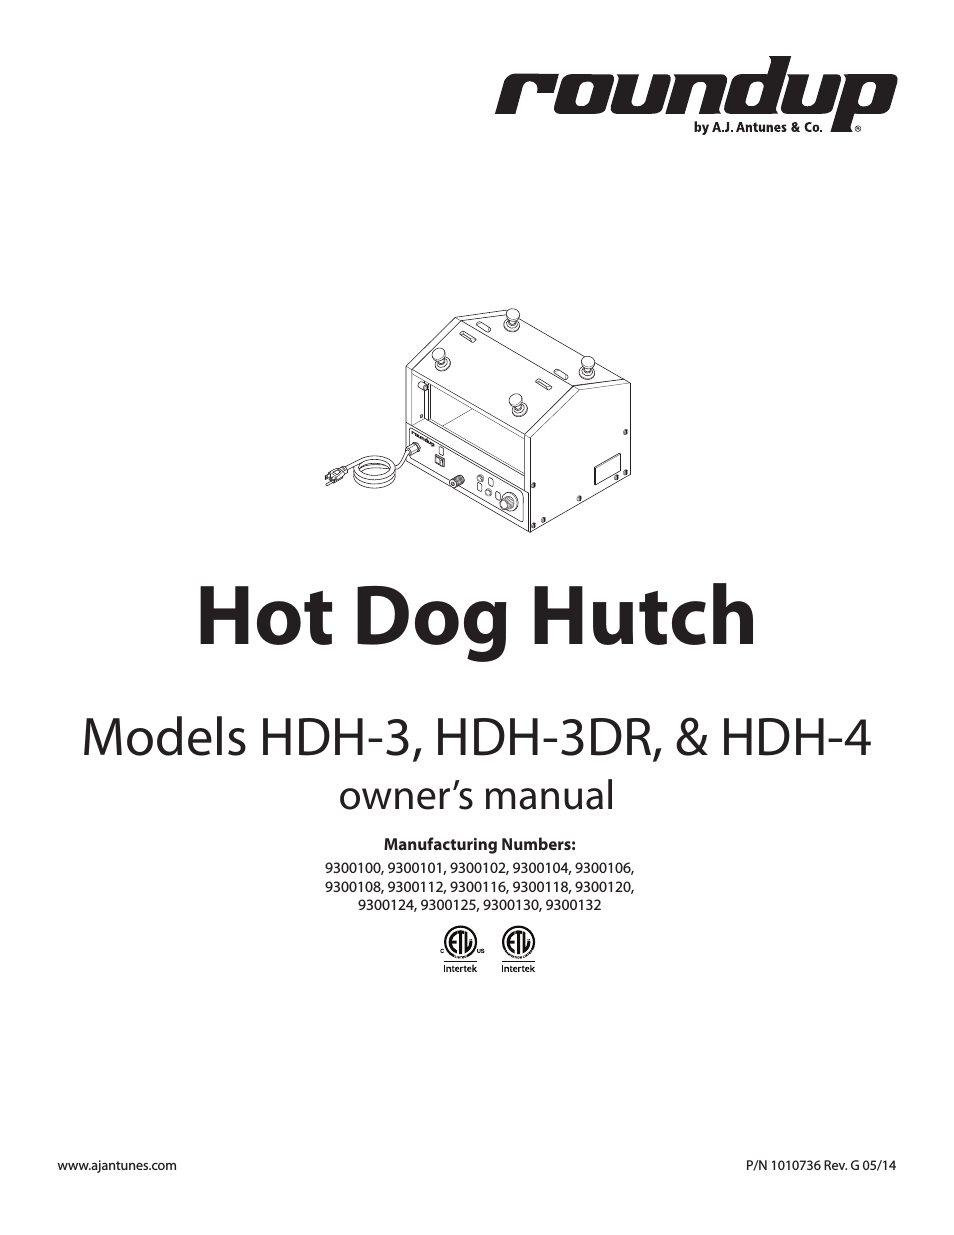 HDH-3DR 9300108